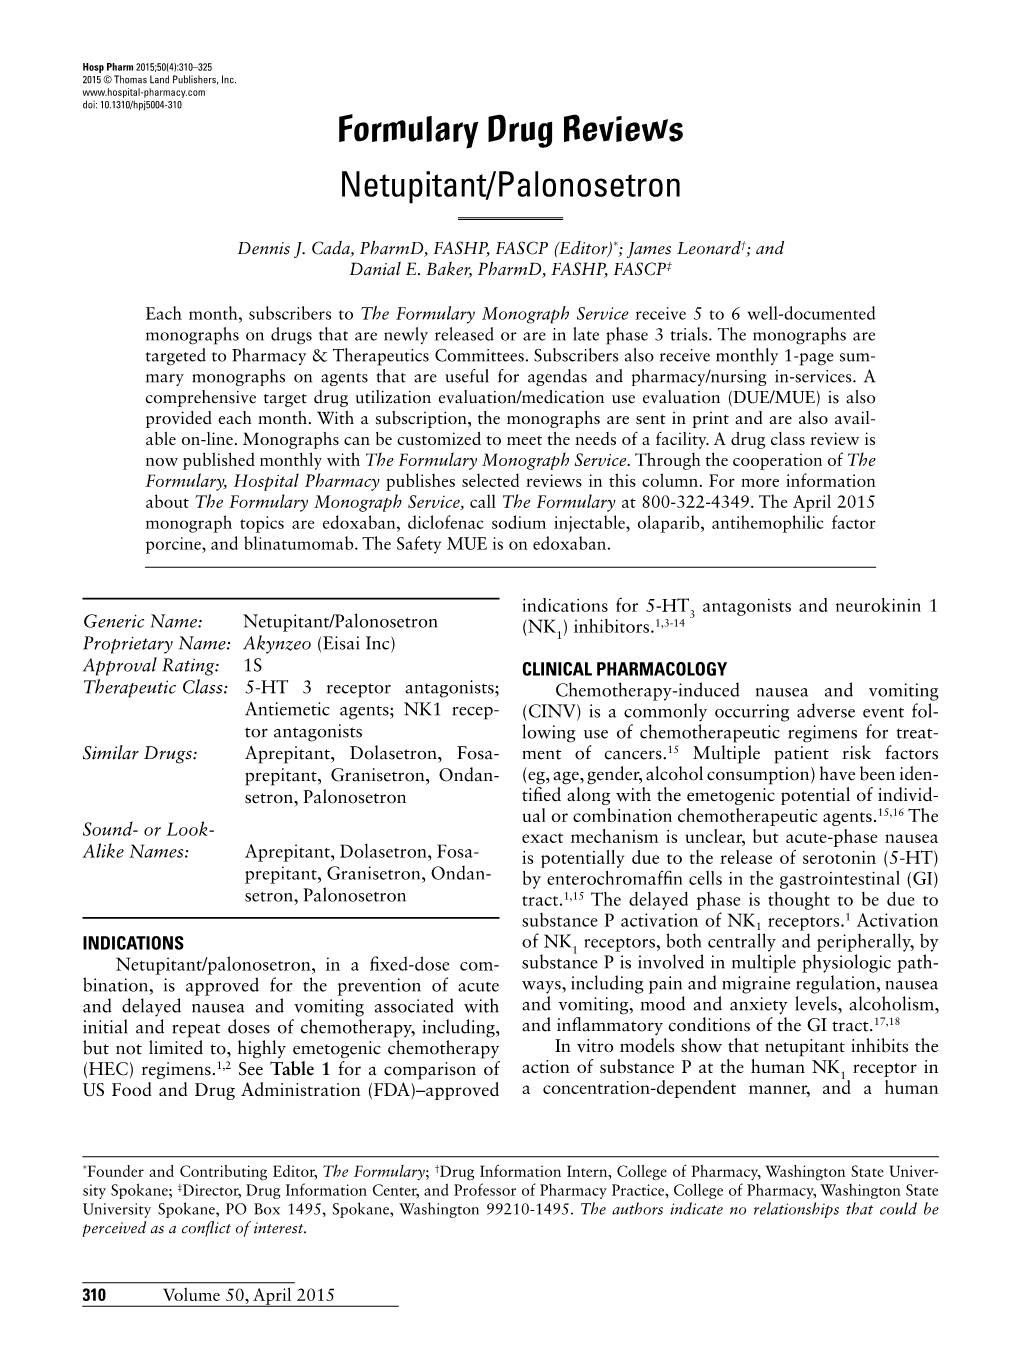 Formulary Drug Reviews Netupitant/Palonosetron